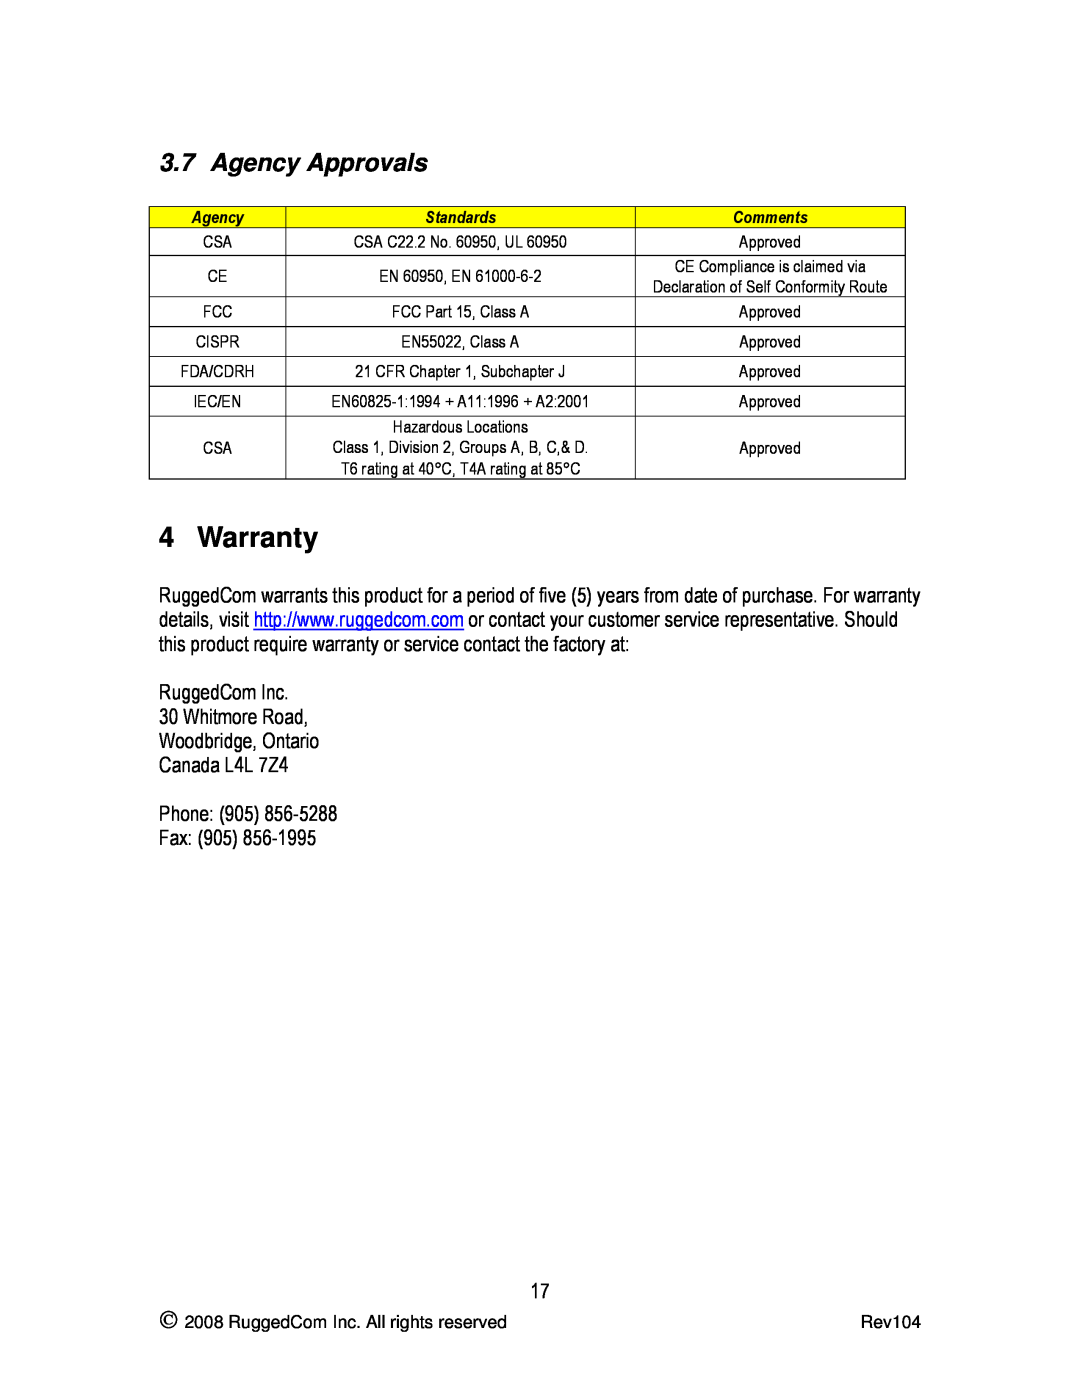 RuggedCom RS900G manual Warranty, Agency Approvals 